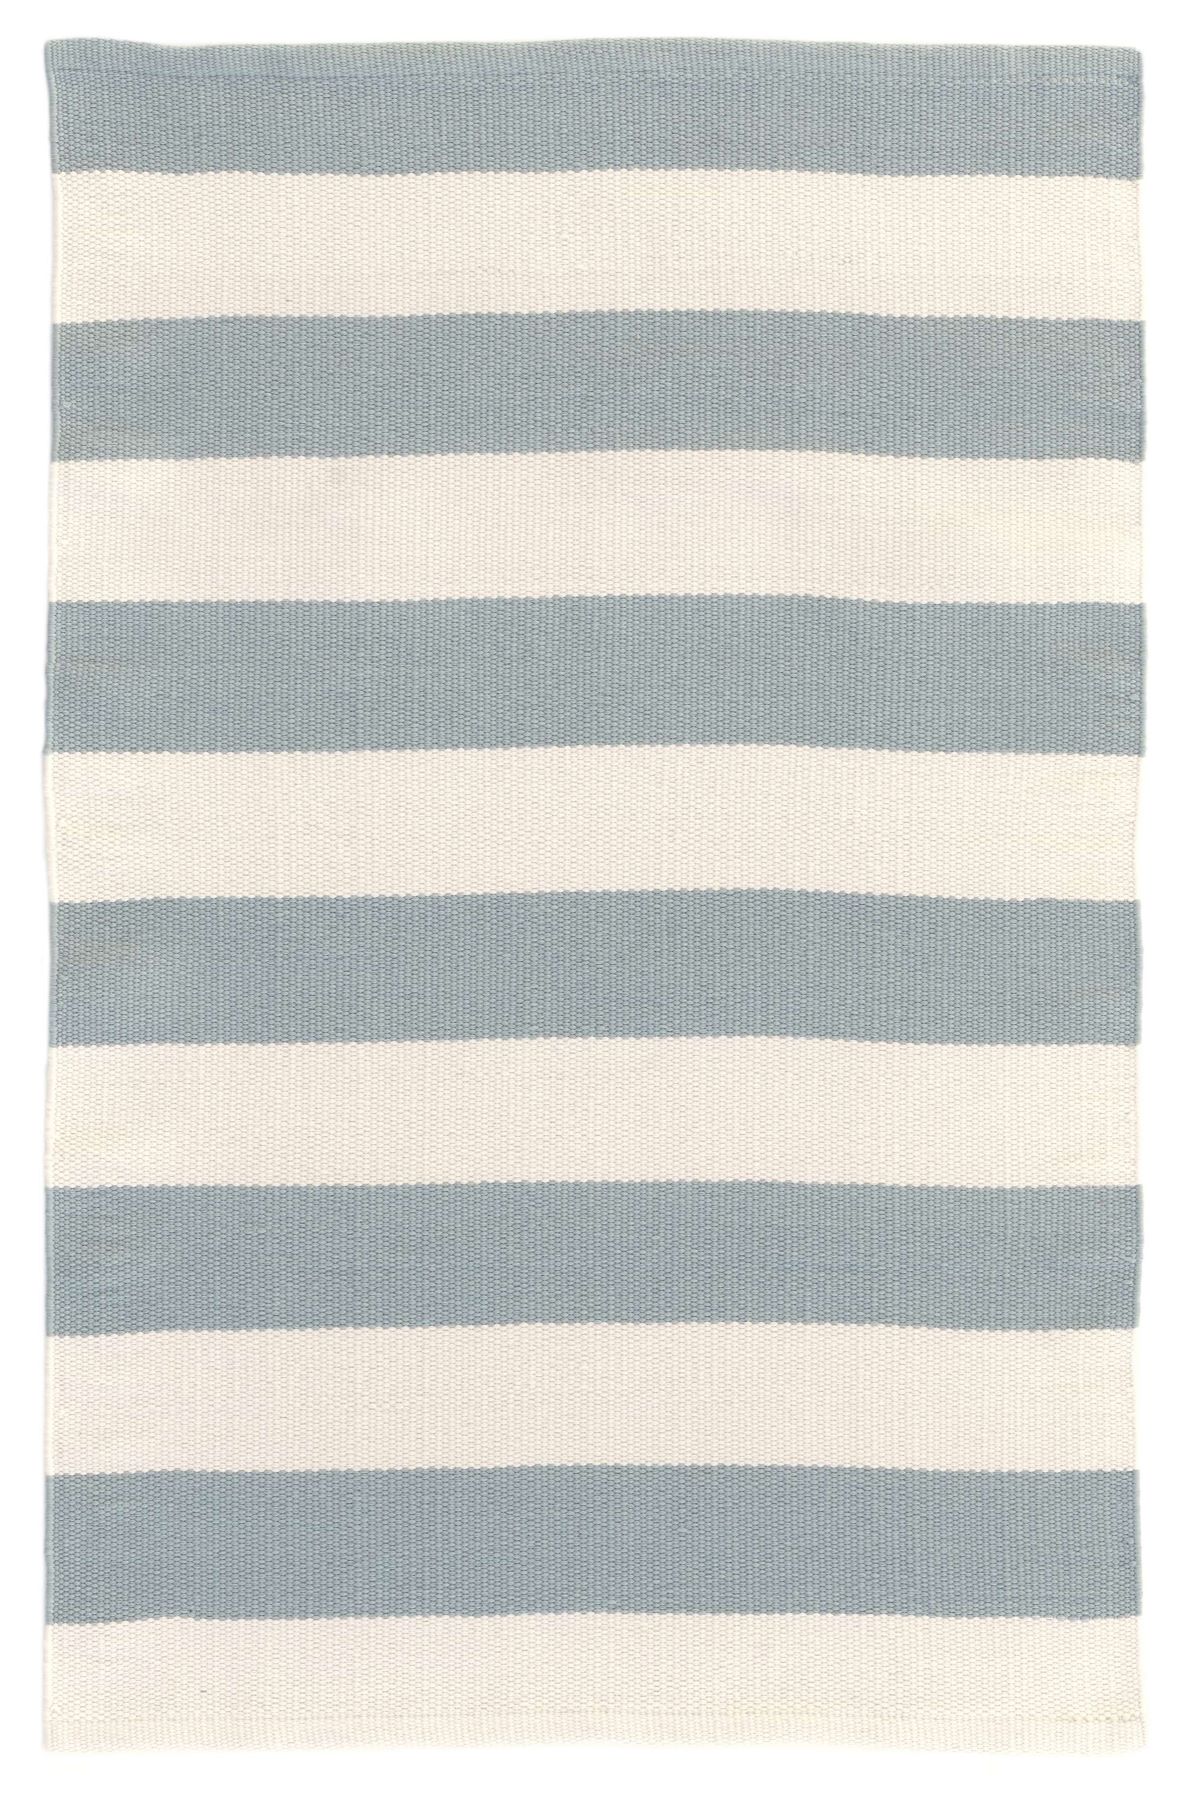 dash-and-albert-rug-catamaran-stripe-light-blue-ivory